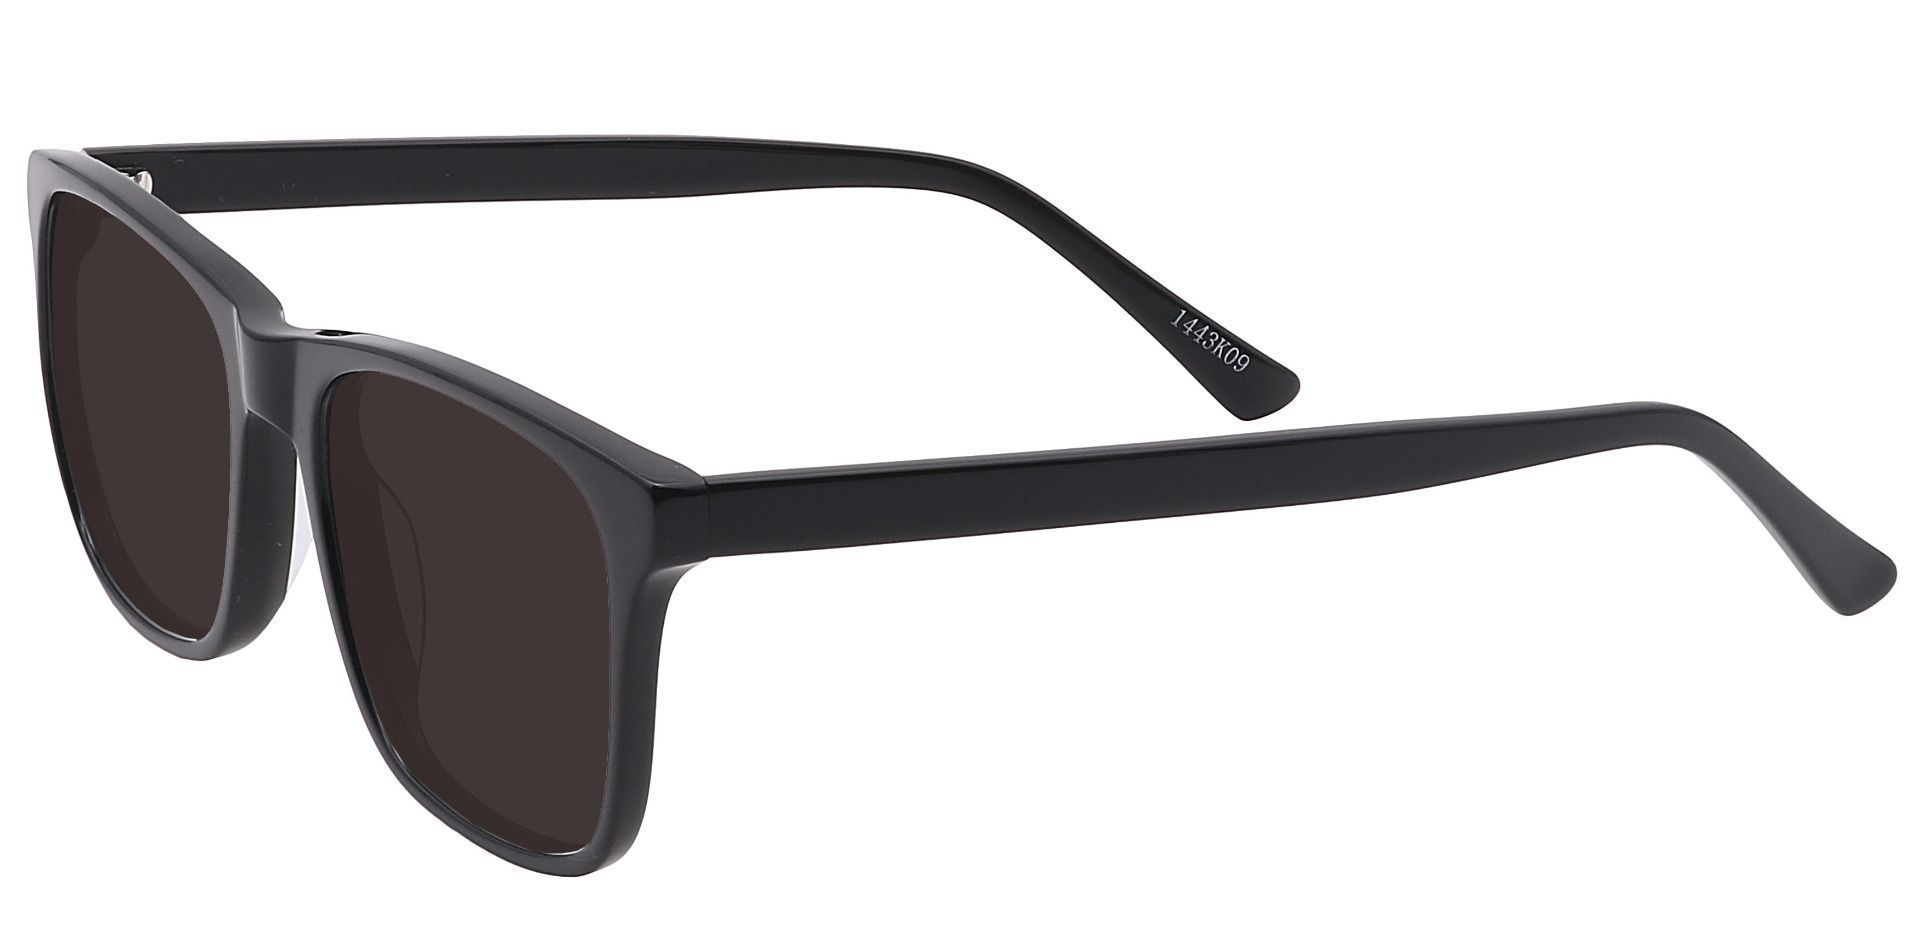 Cantina Square Non-Rx Sunglasses - Black Frame With Gray Lenses